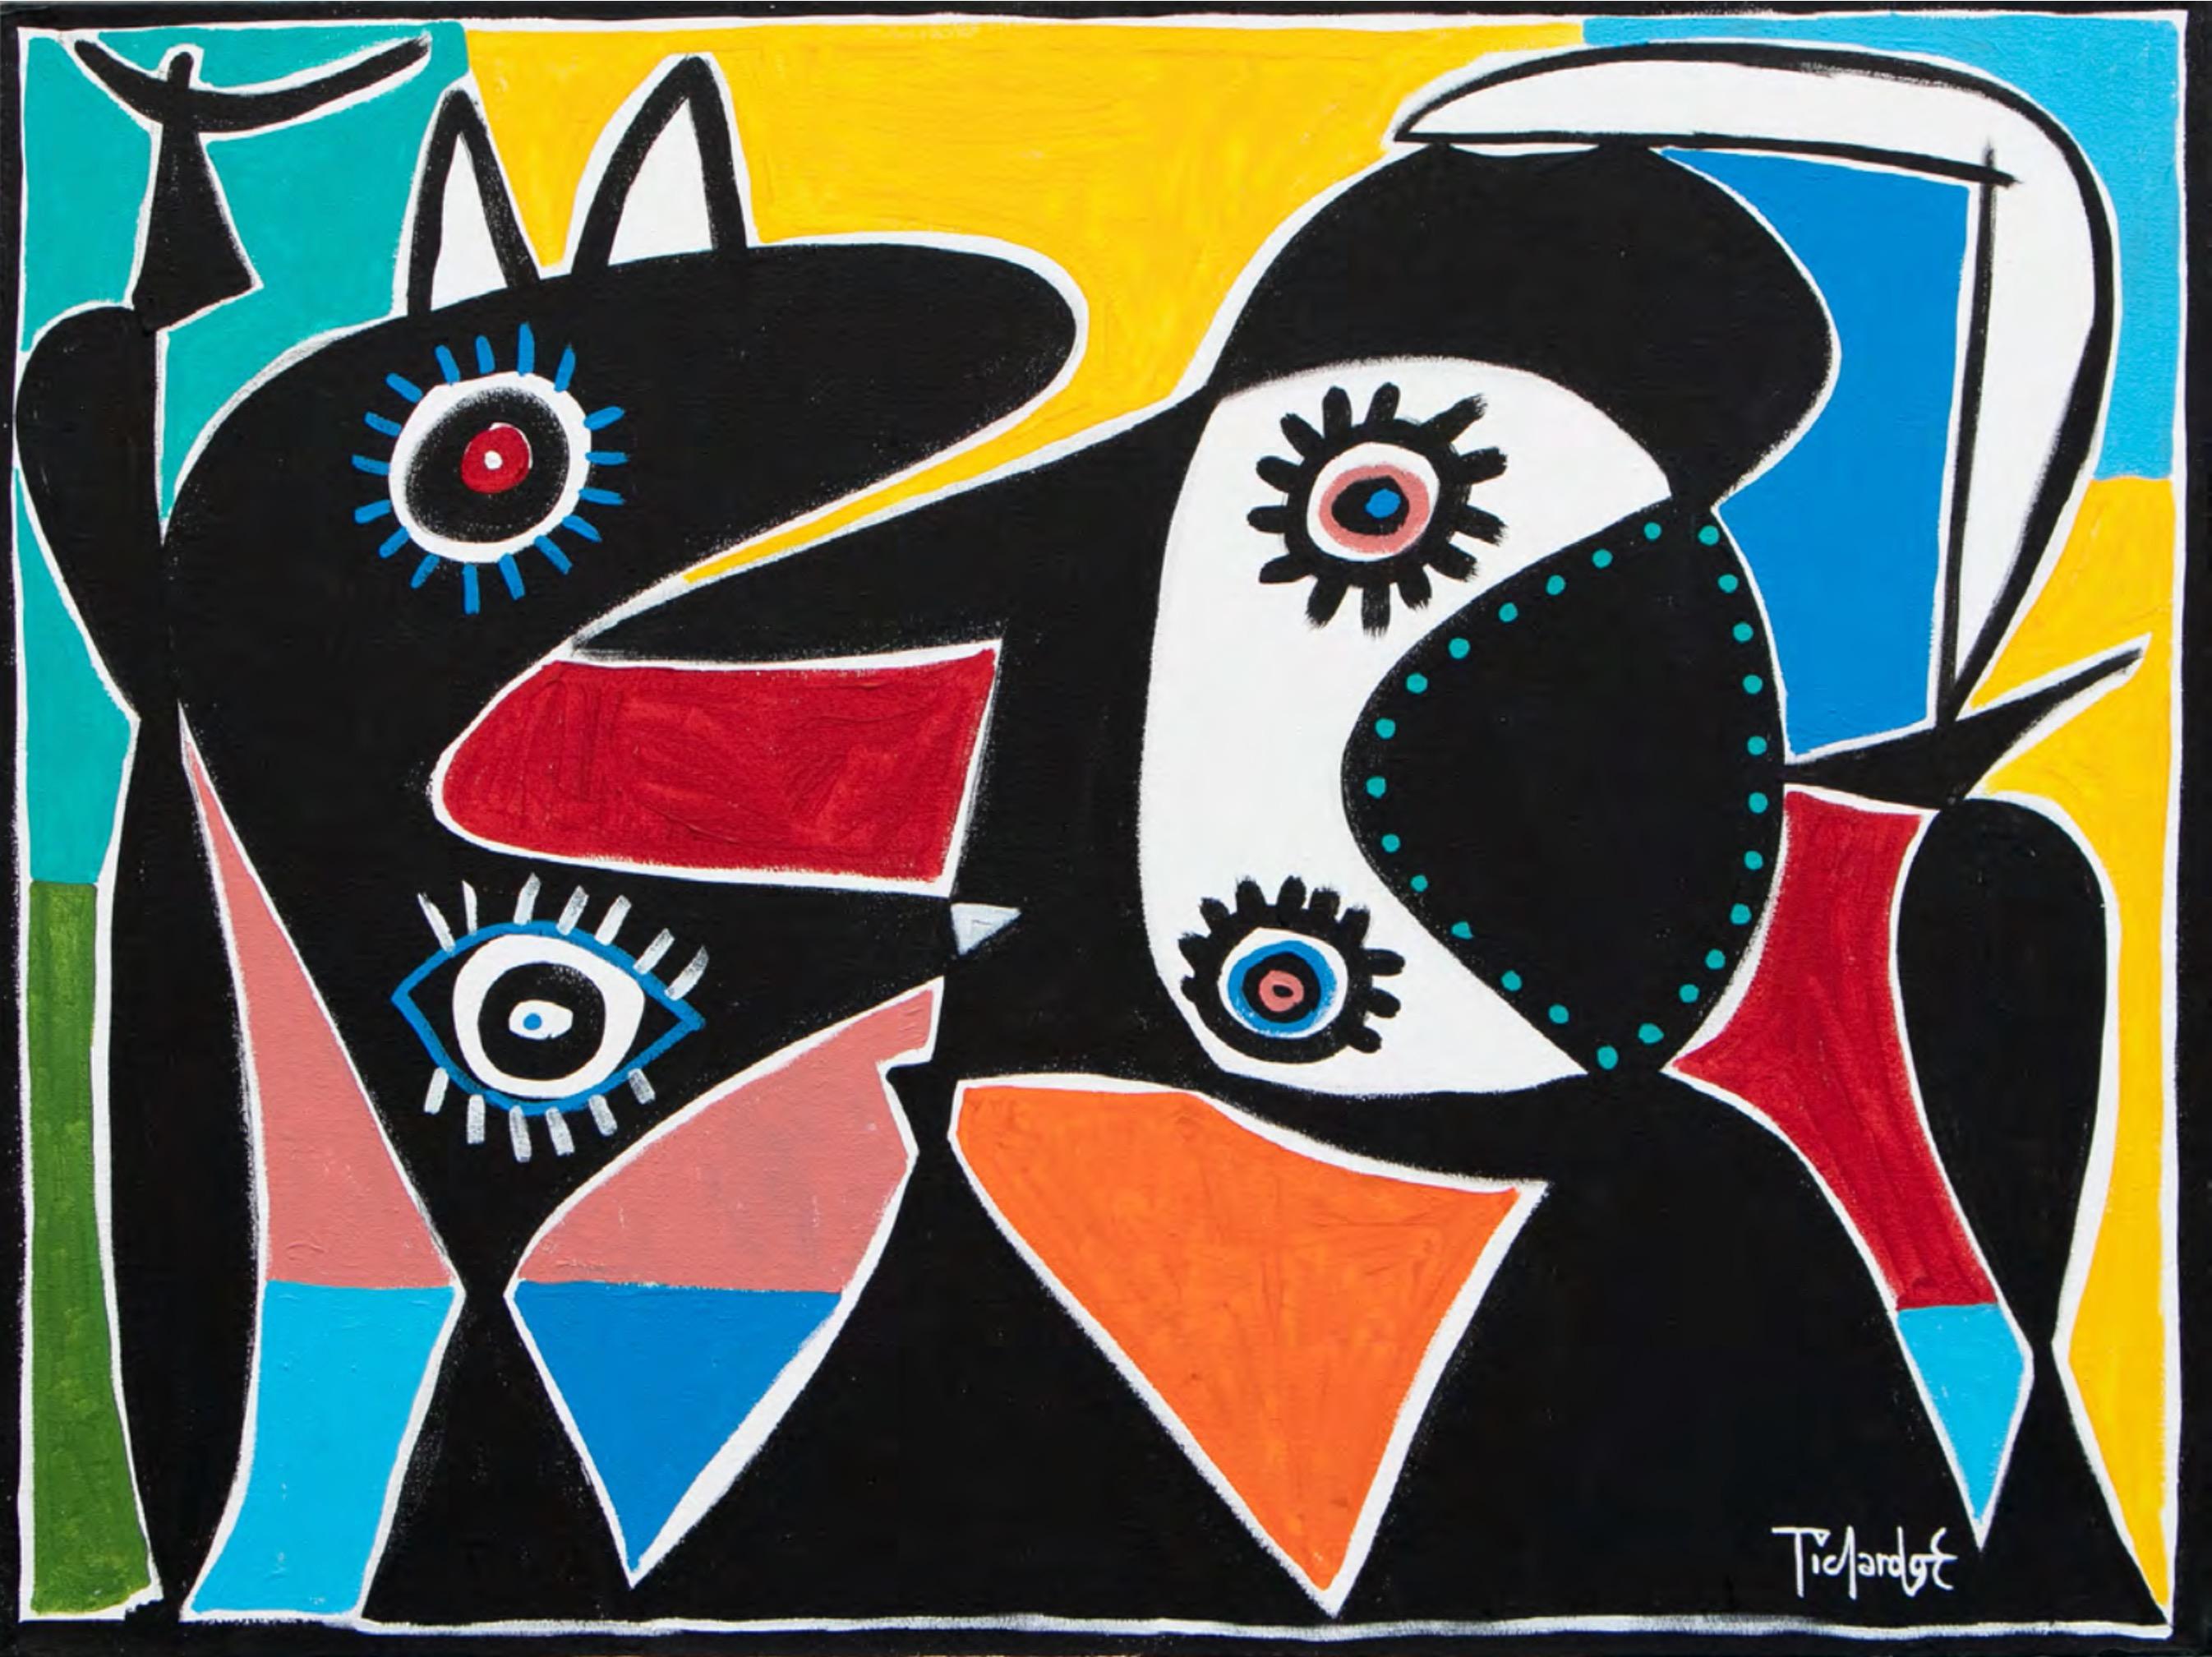 Contemporary Art, Abstract Painting
Acrylic on canvas
75x100cm
Signed 


About the artist
Enrique Pichardo (Mexico City, 1973) graduated from Escuela Nacional de Pintura, Escultura y Grabado (ENPEG) “La Esmeralda”. As a Mexican Contemporary